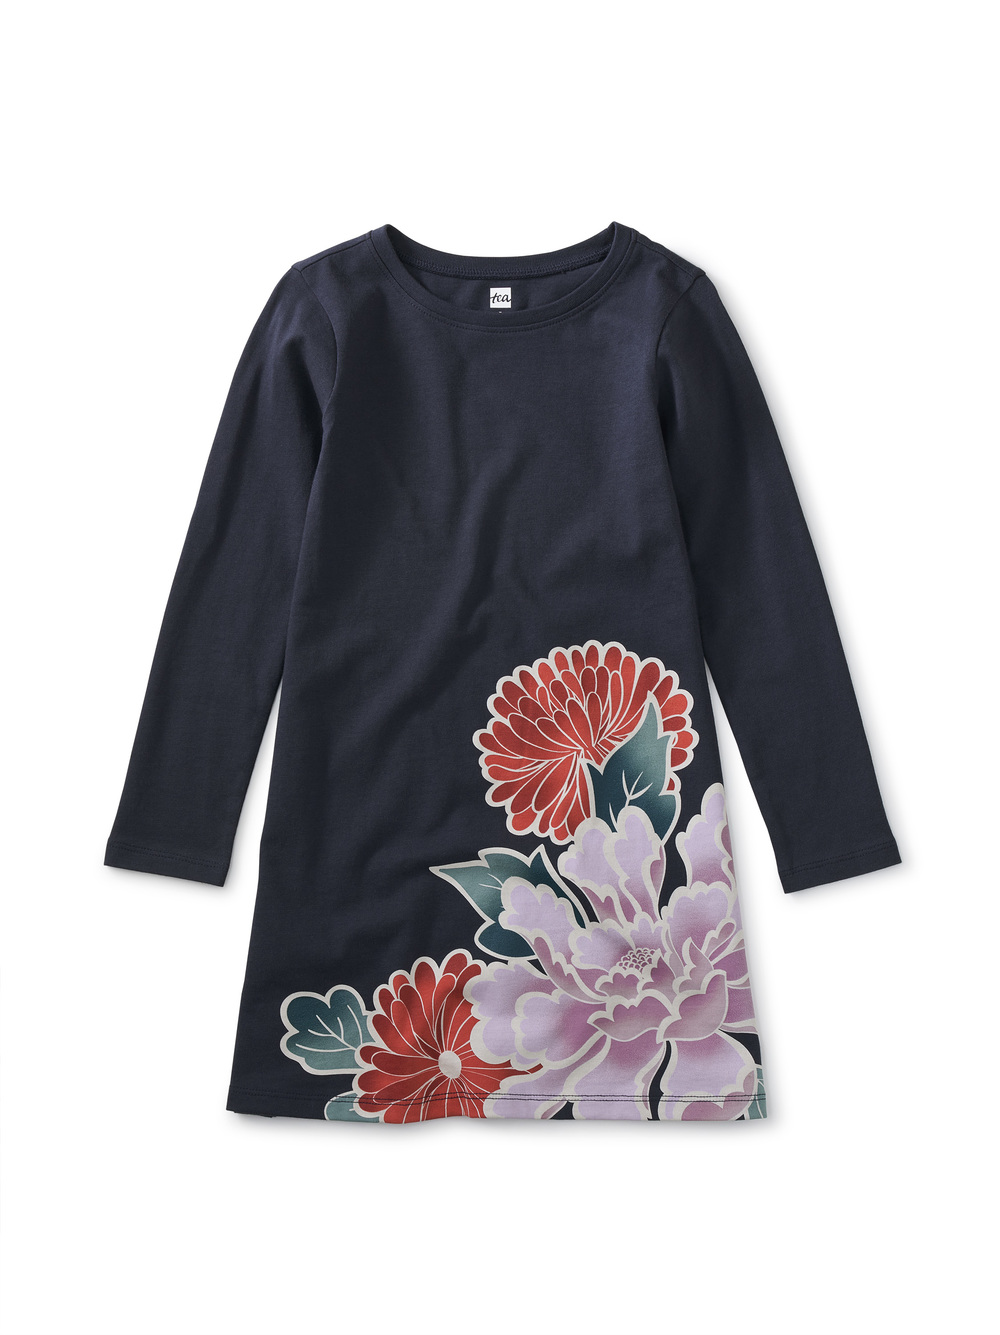 Chrysanthemum T-Shirt Dress